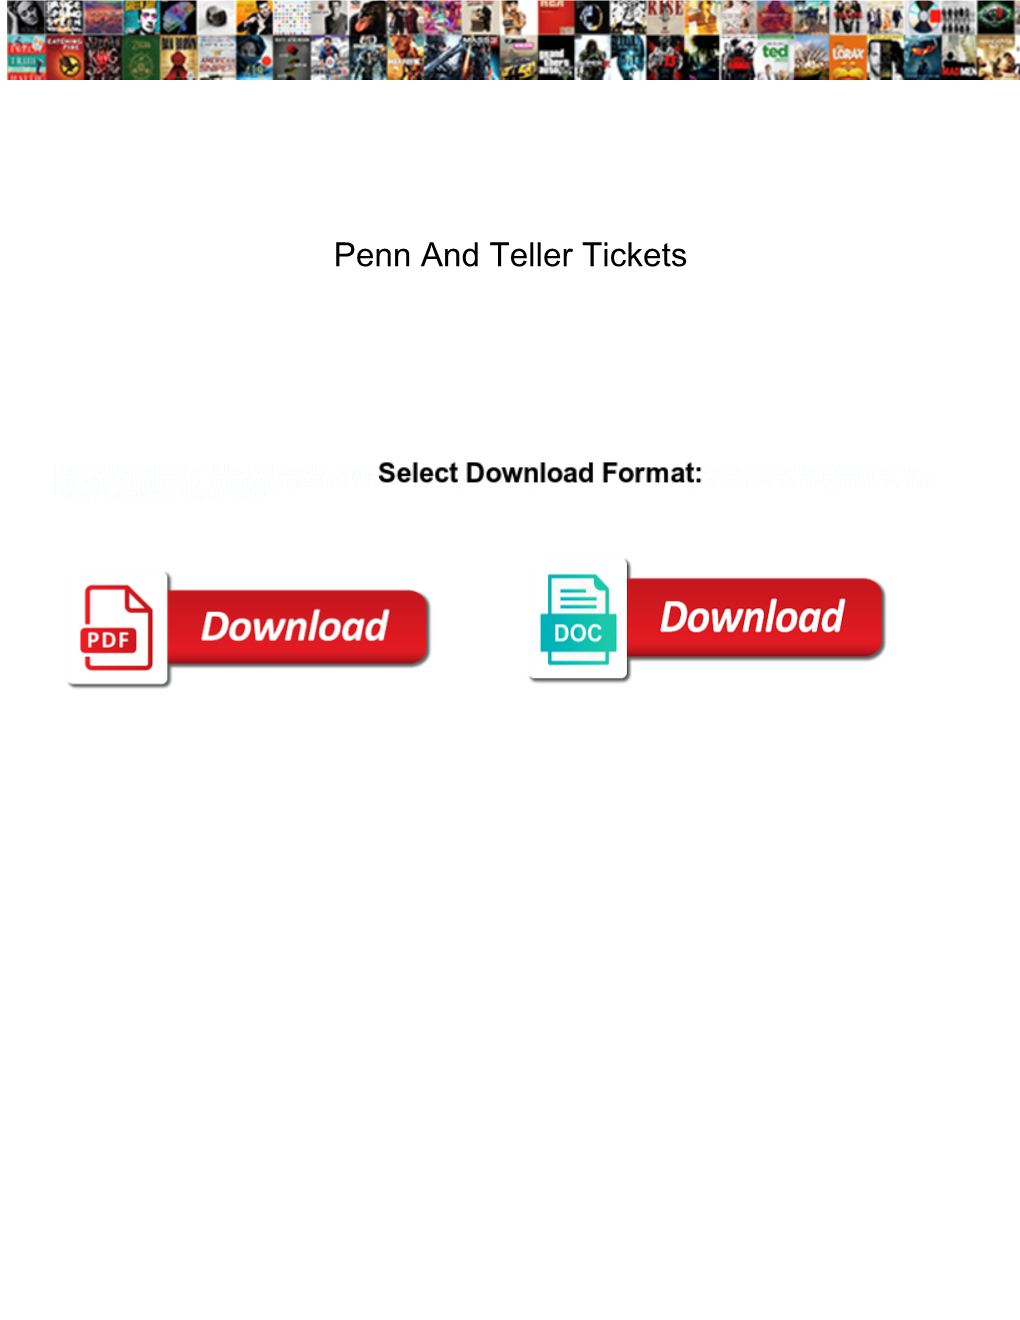 Penn and Teller Tickets